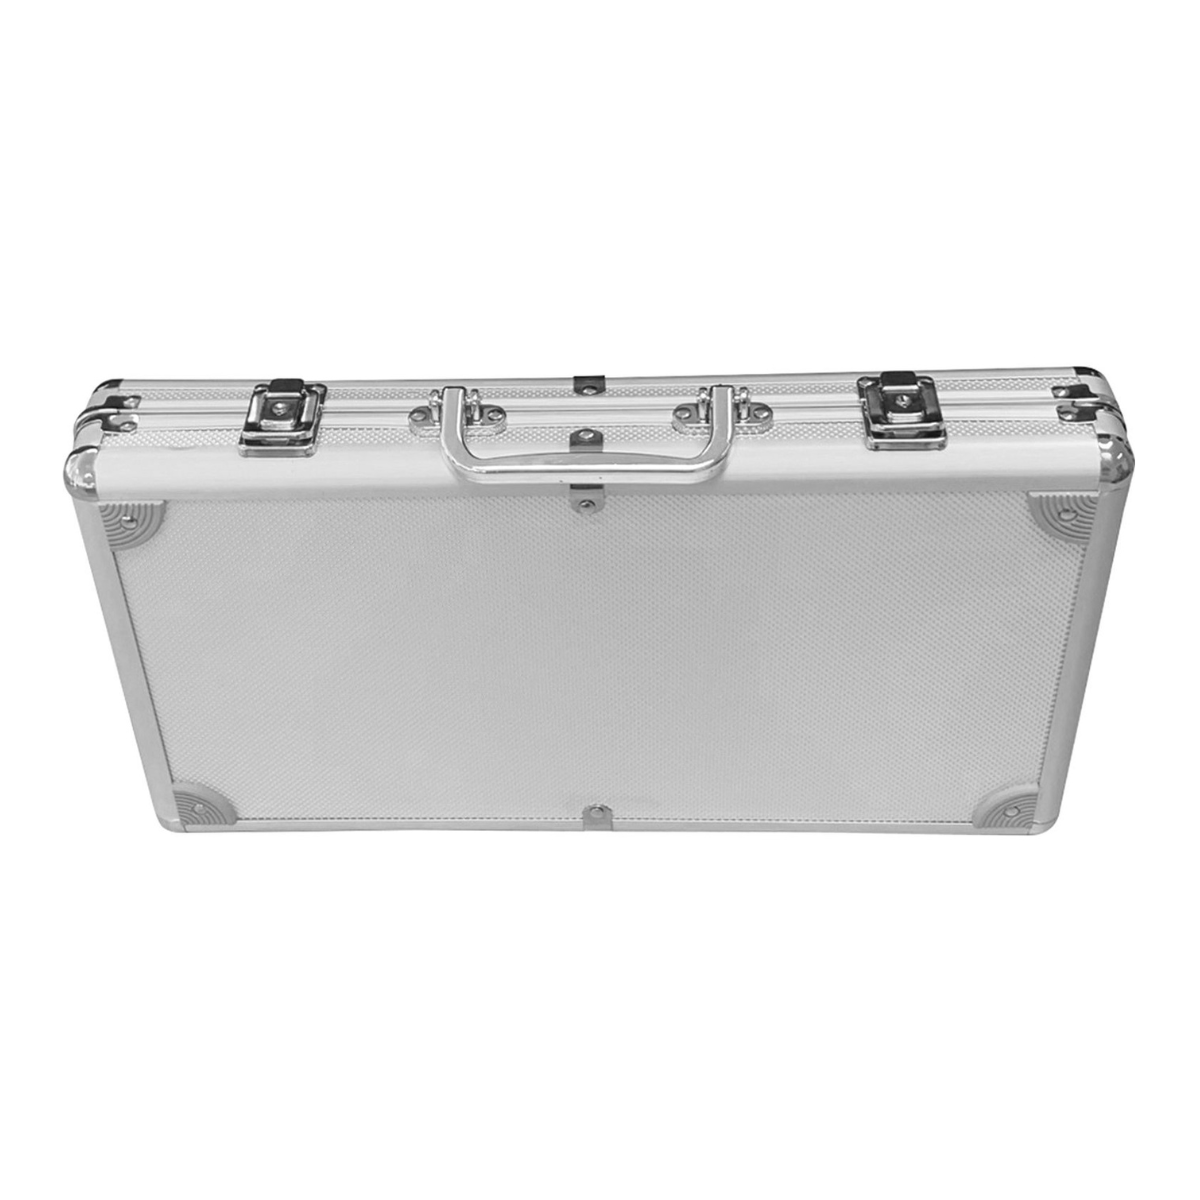 The Full House Aluminium Case Poker Set